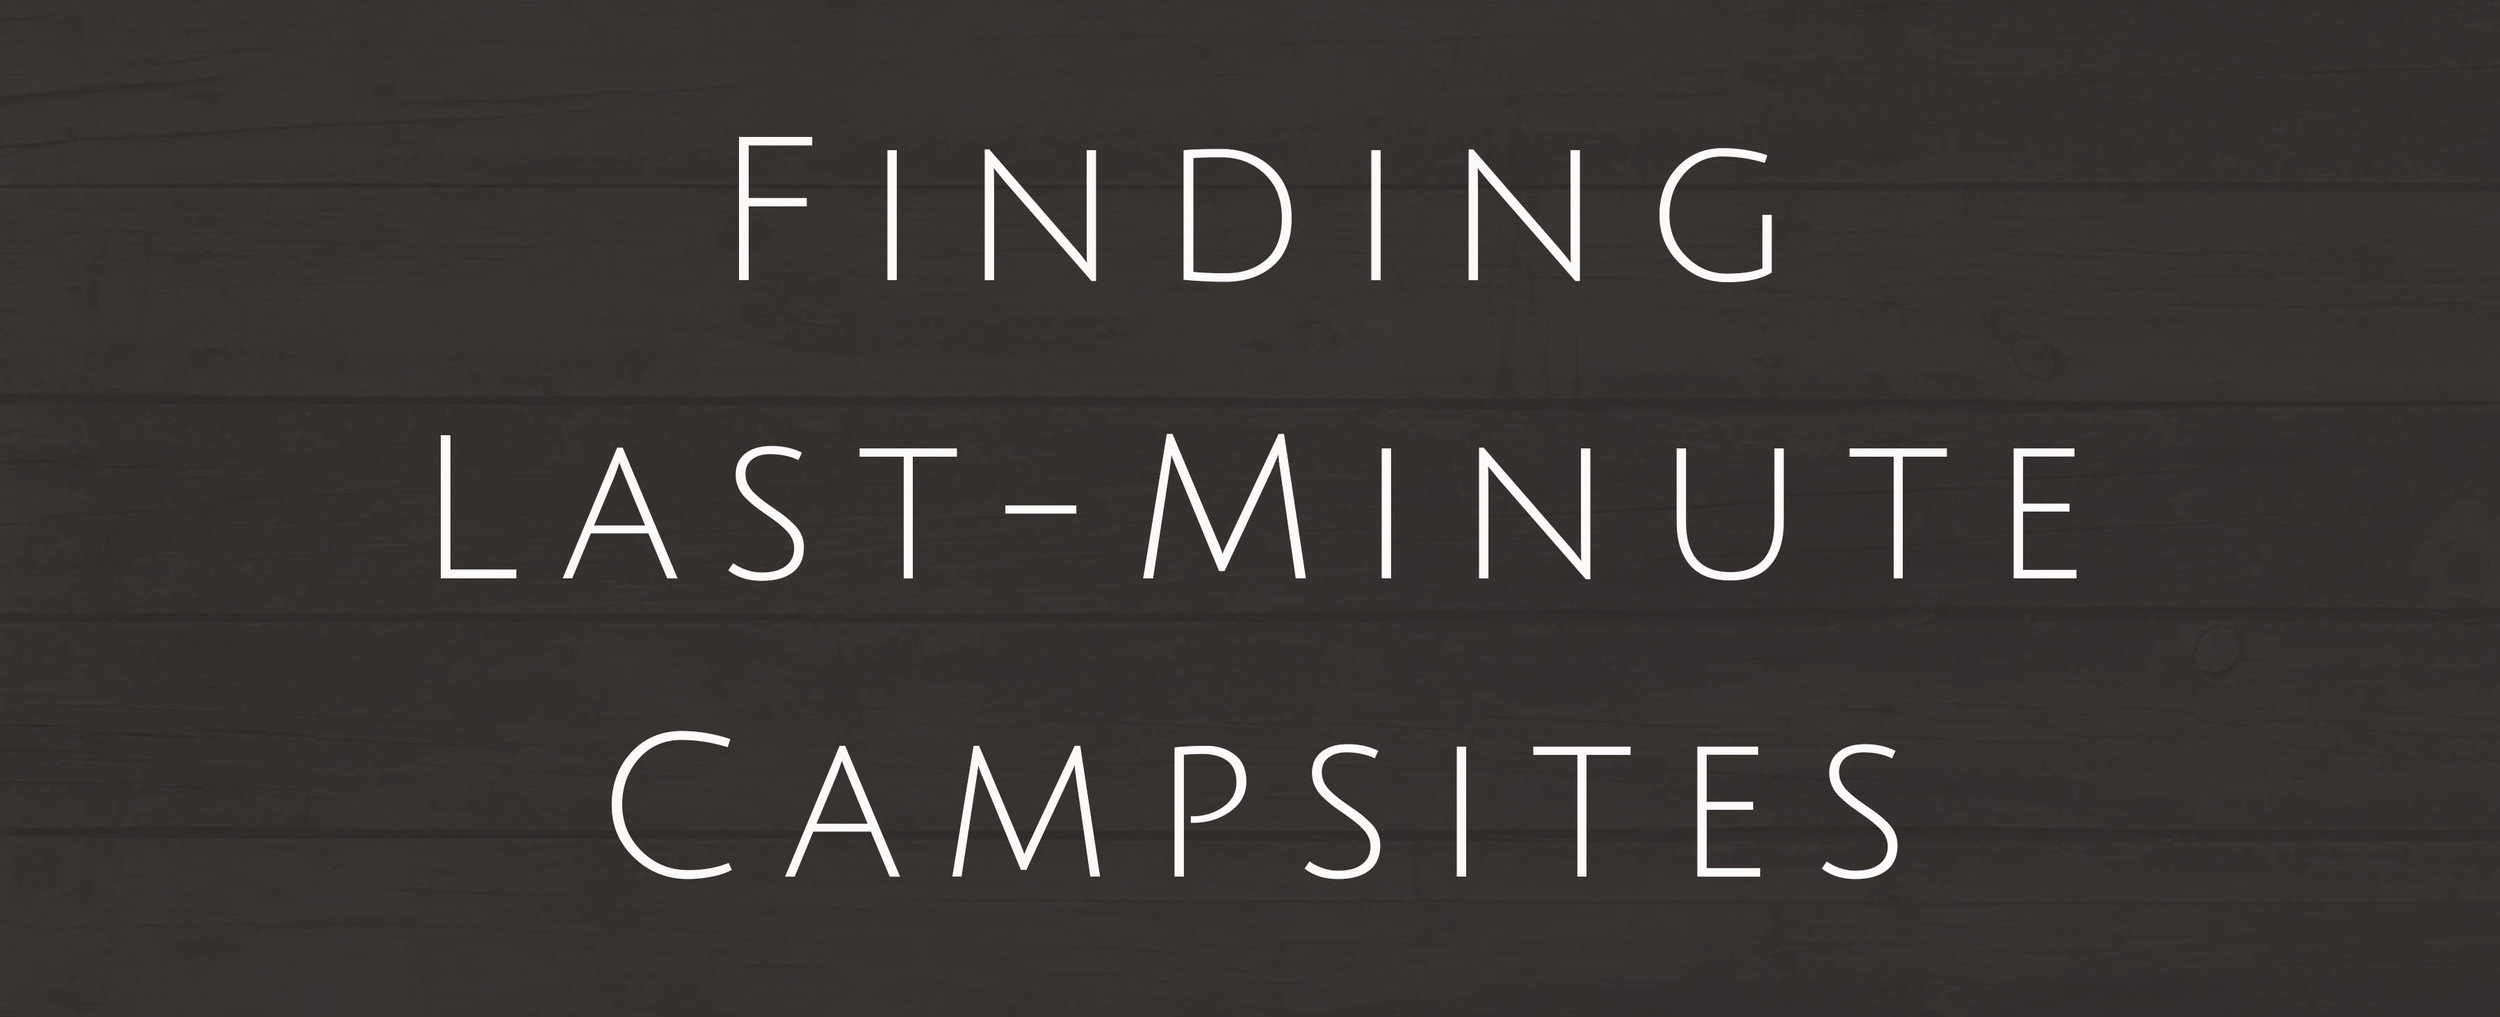 Yosemite - Finding LM Campsites.jpg